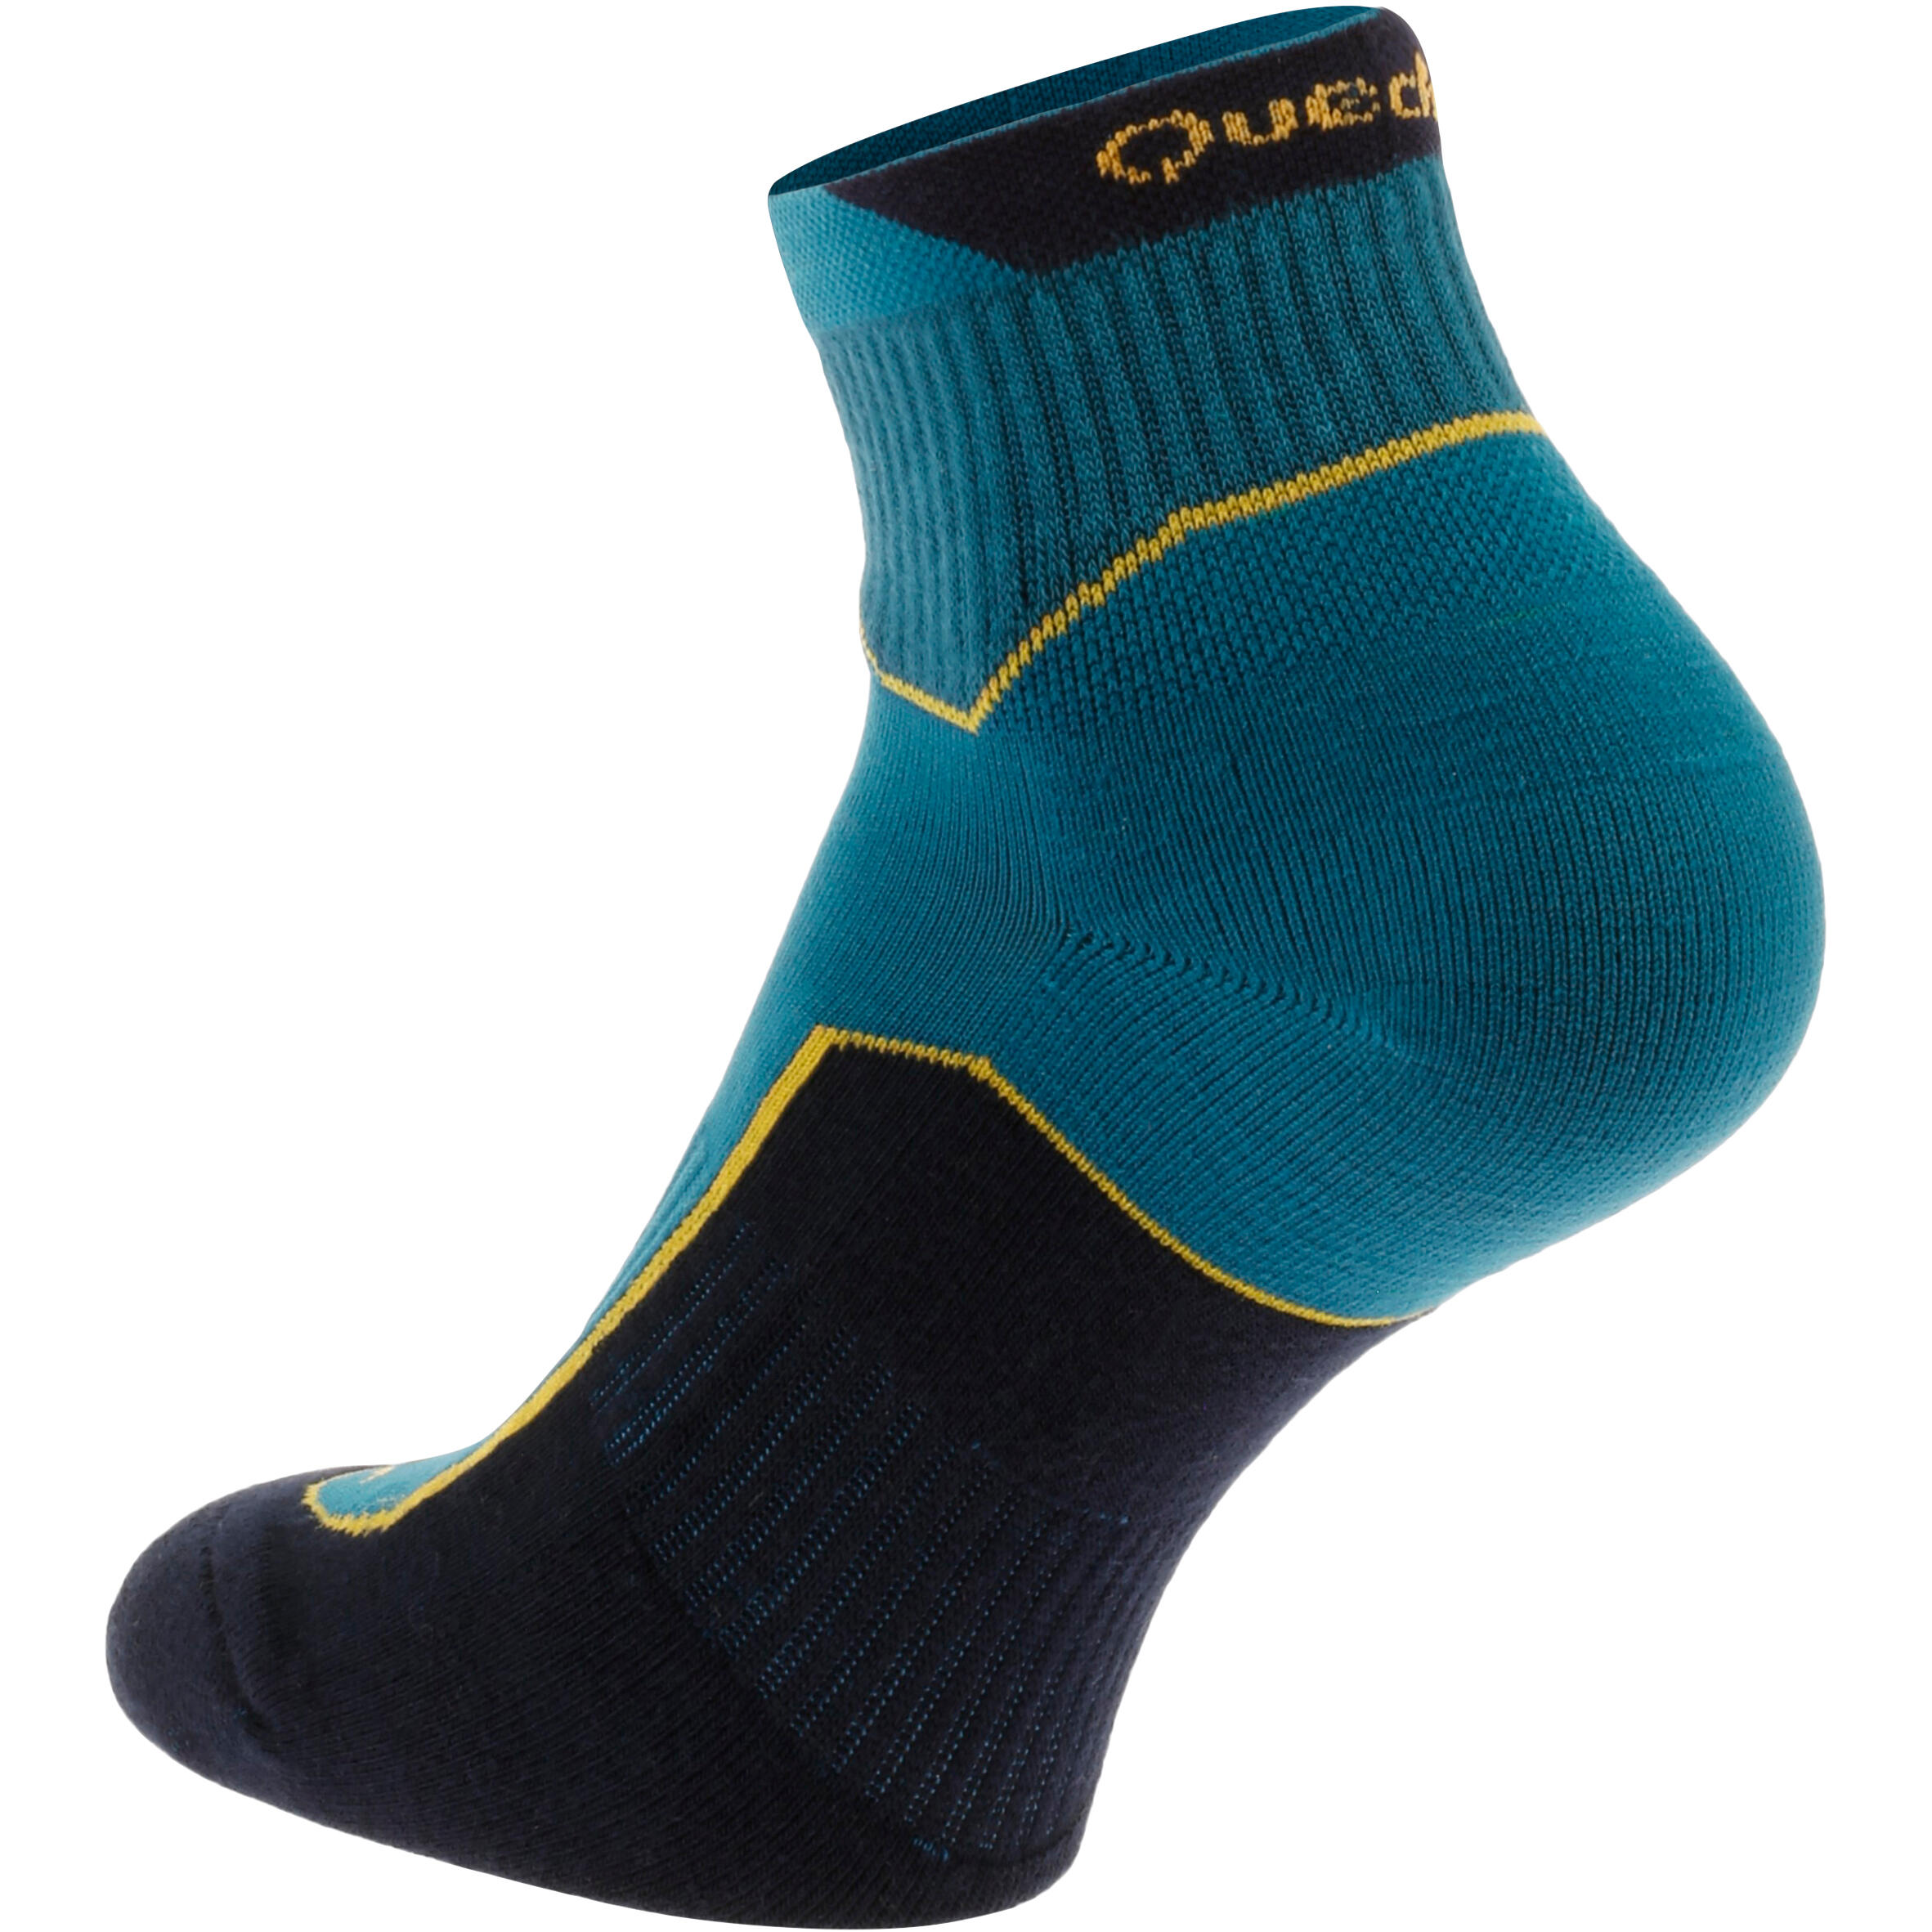 2 pairs of adult’s medium Arpenaz 100 hiking socks - Blue 4/7